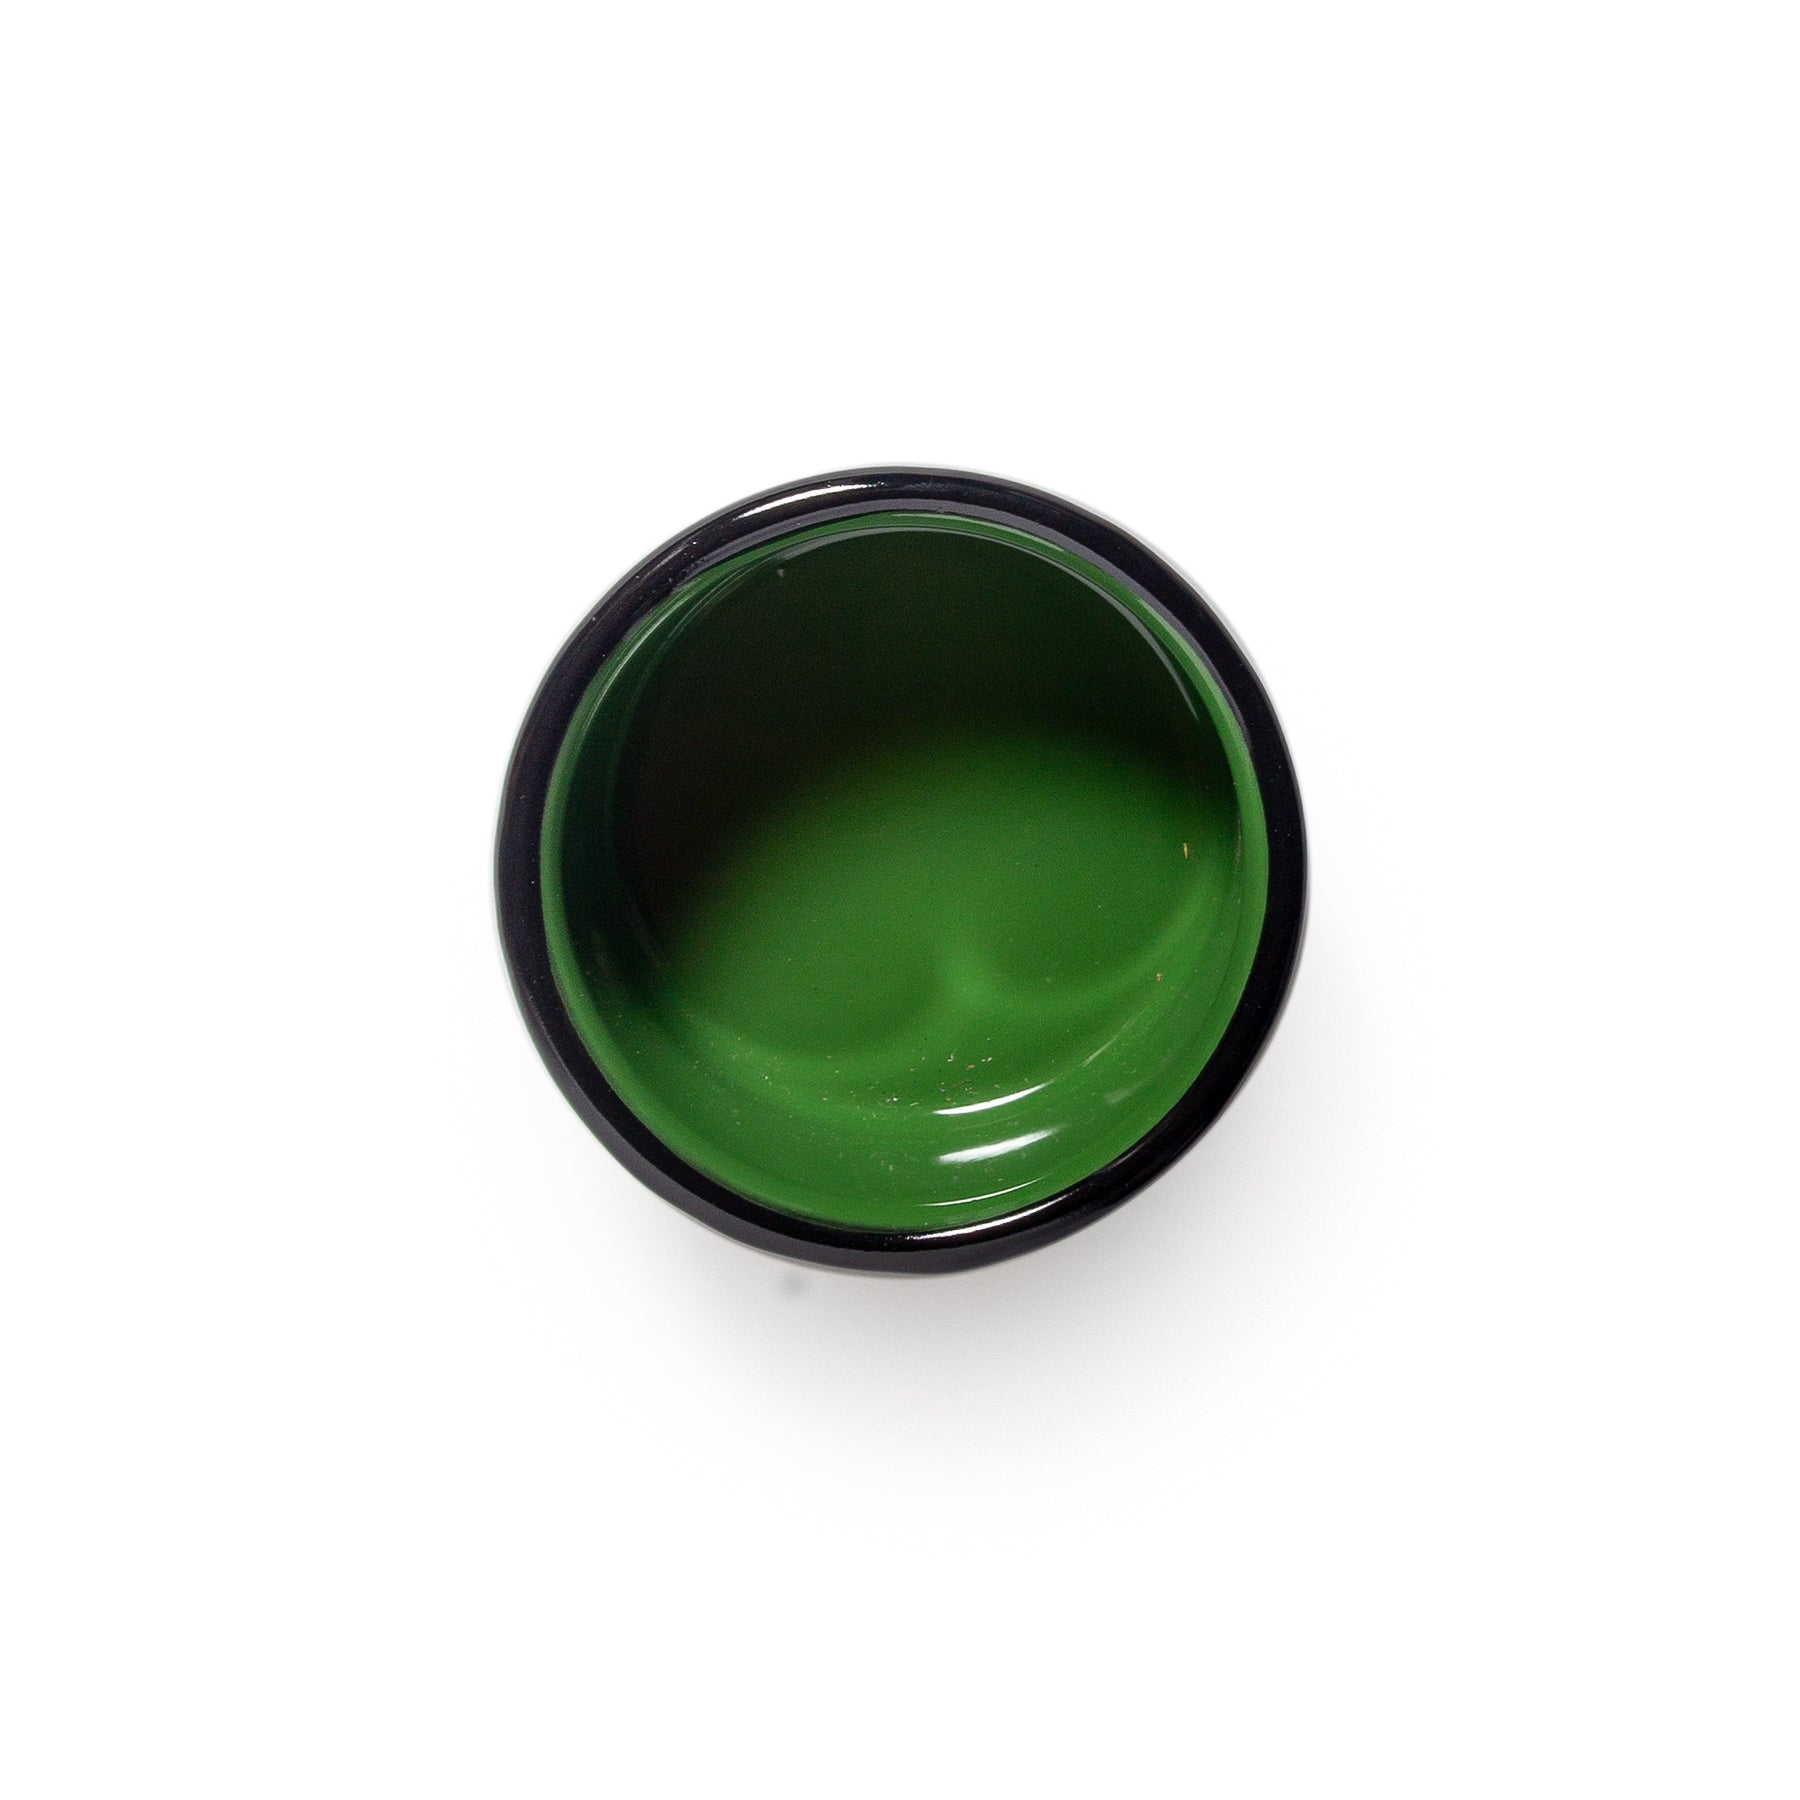 Green and Black Enamel Sauce Bowl aerial